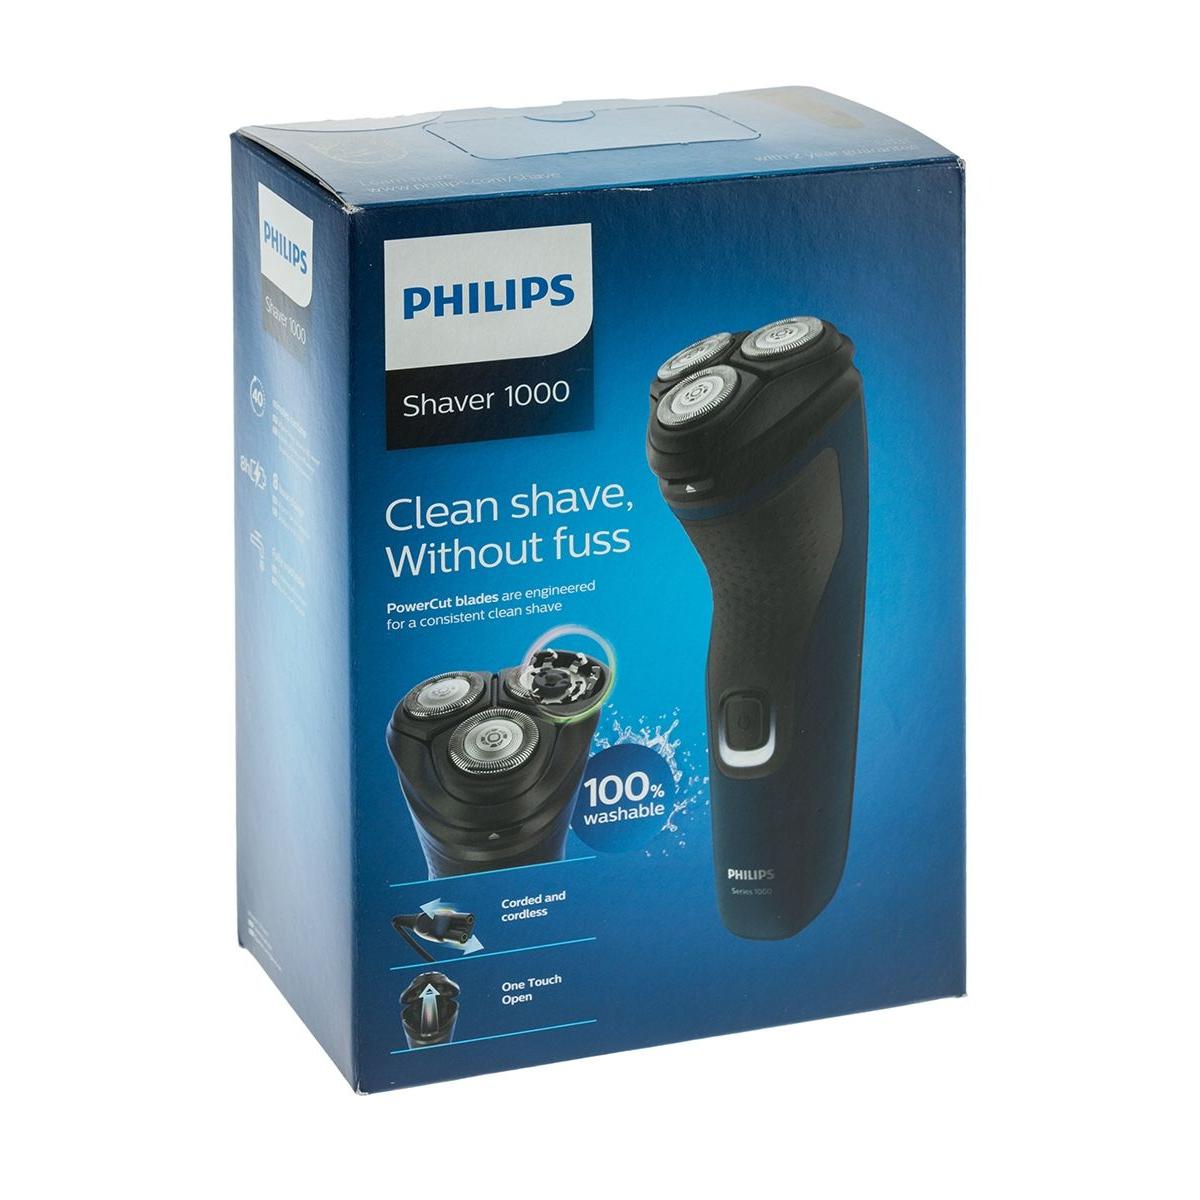 Philips s1131/41. Электробритва Philips s1131/41 черный. Бритва роторная Philips s1520/04 черный/серый. Электробритва Homestar HS-9012 отзывы. Роторная филипс